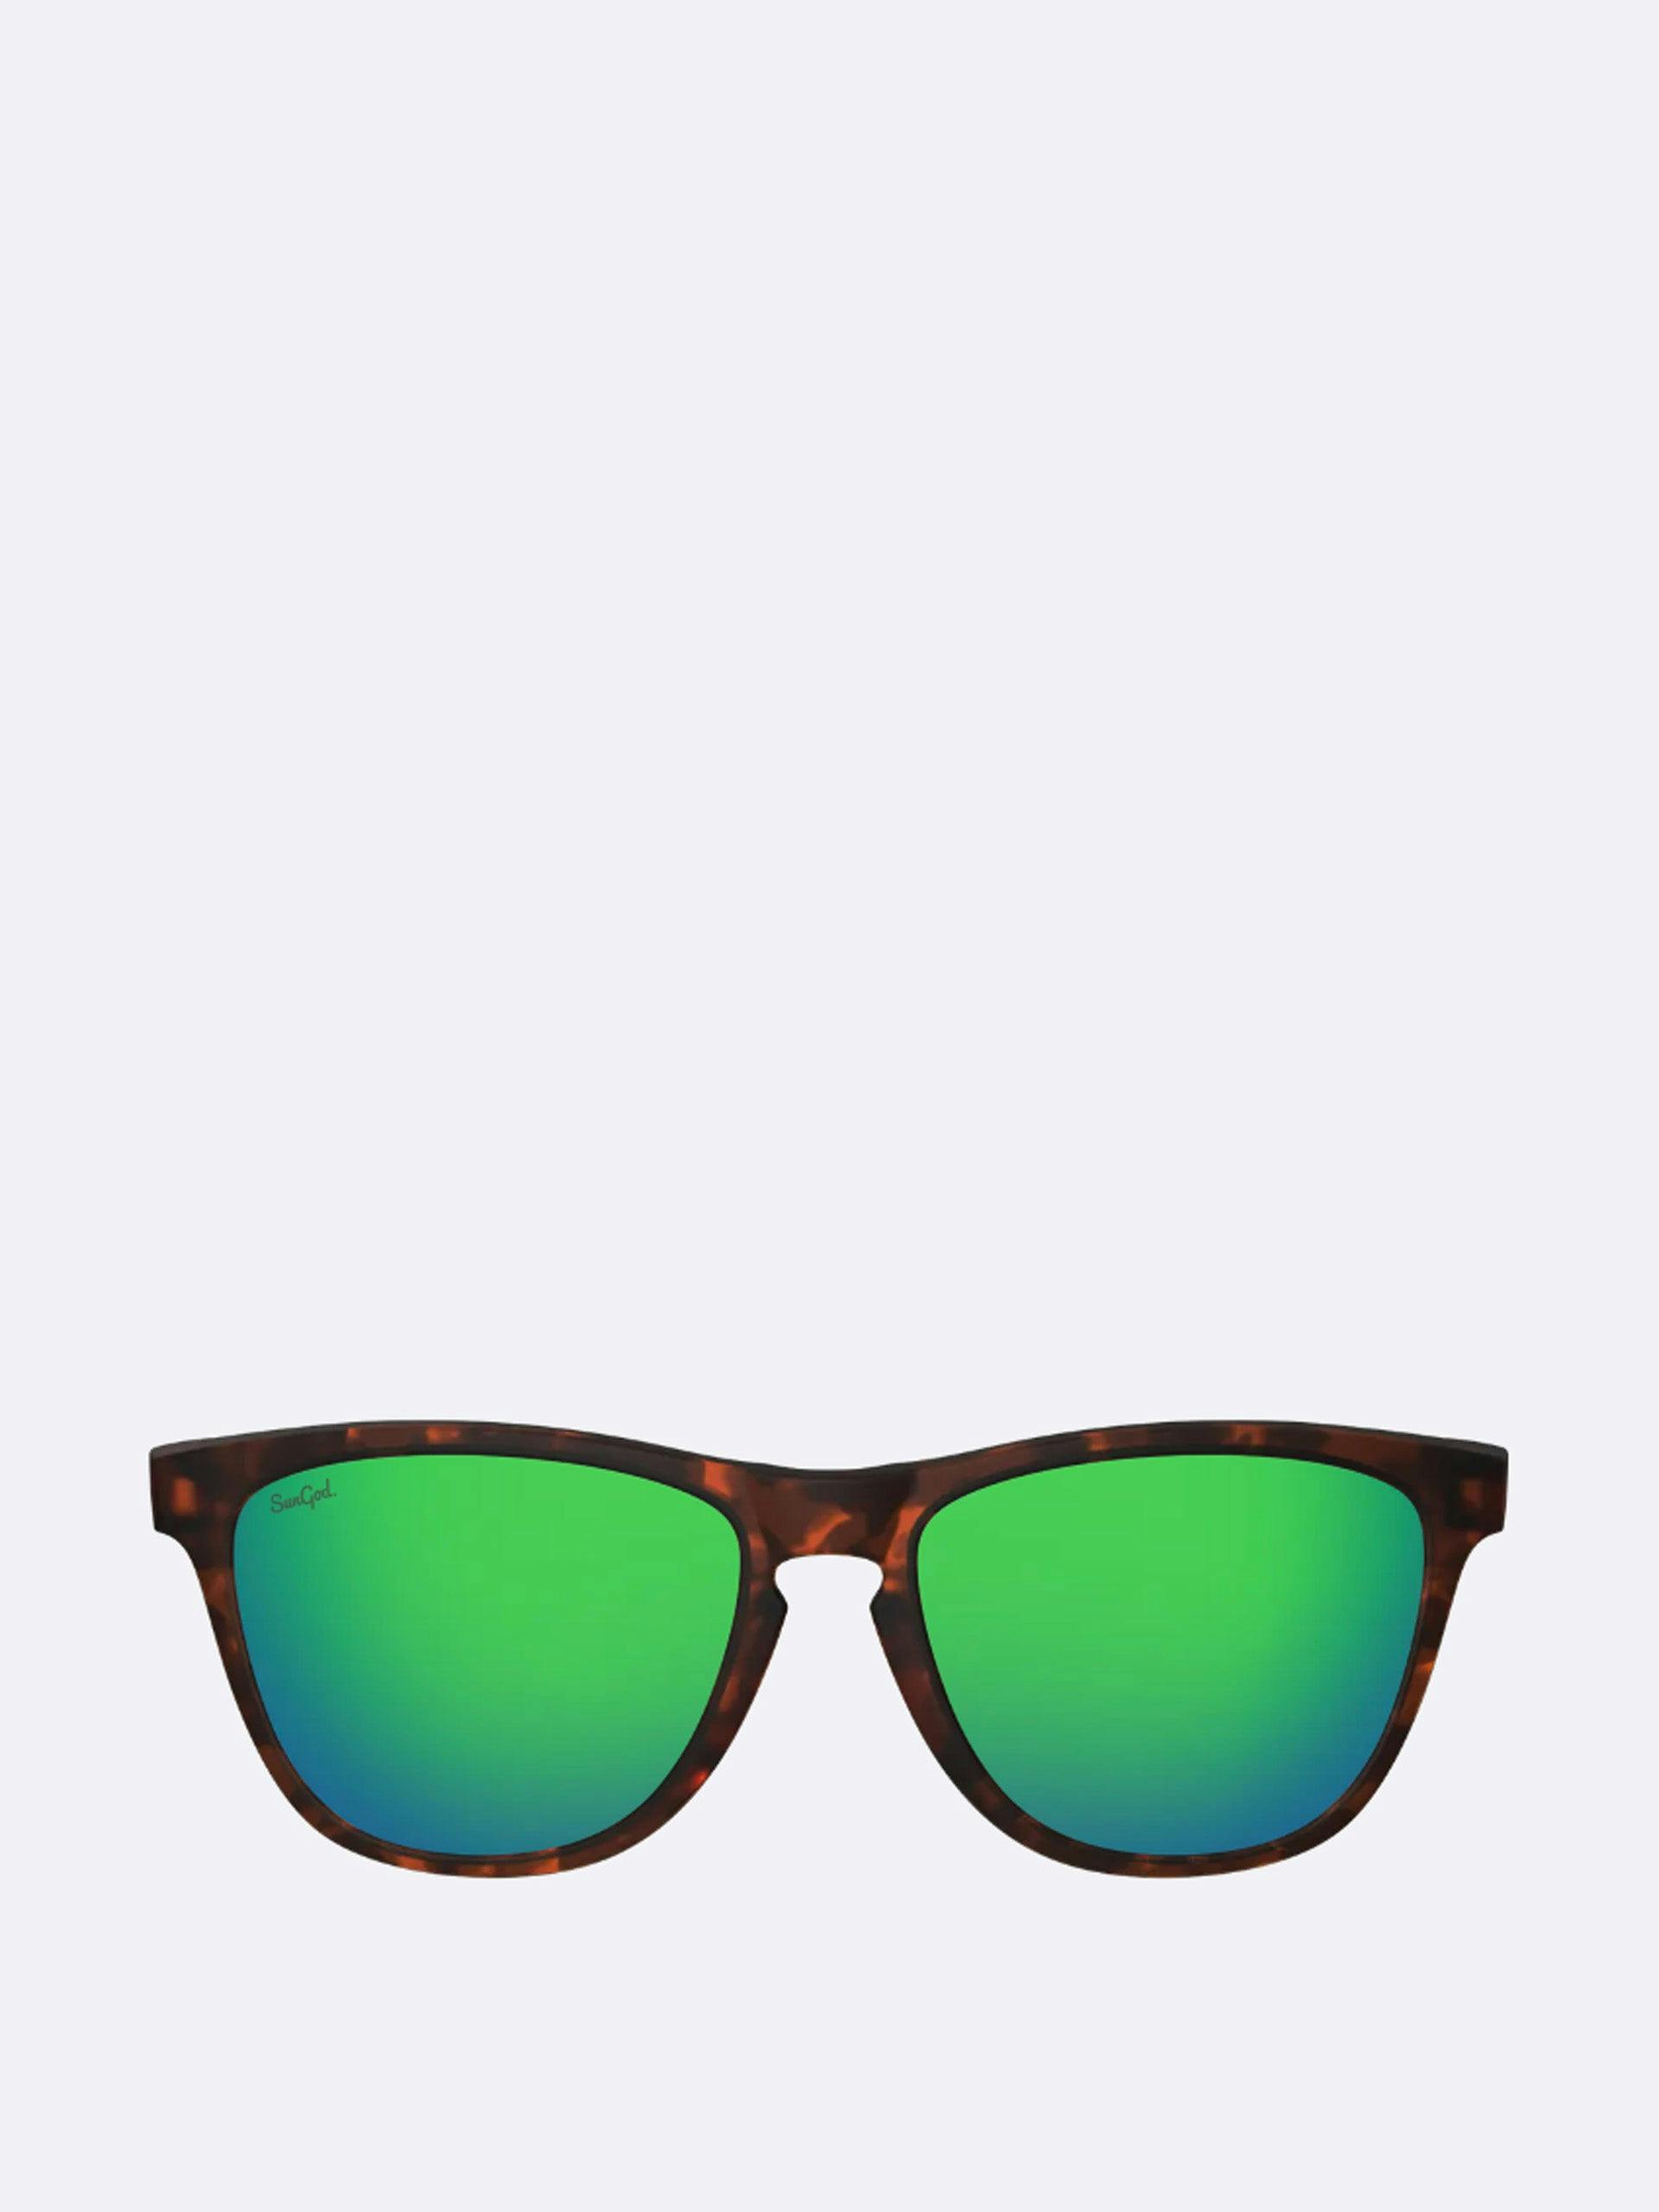 Matte tortoiseshell and green Classic sunglasses